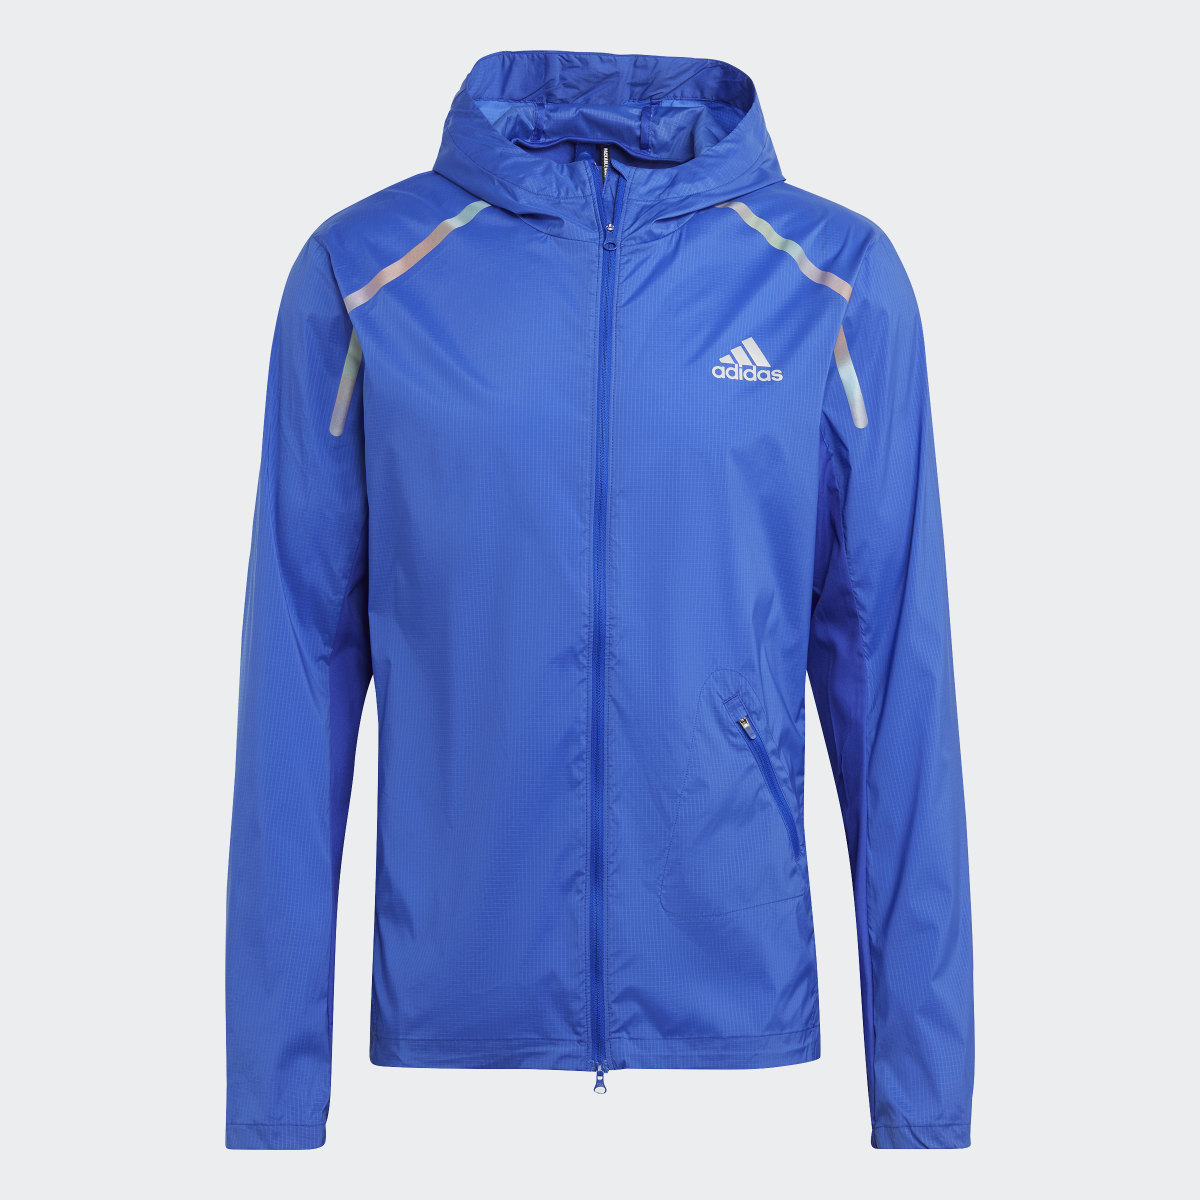 Adidas Marathon Jacket. 5